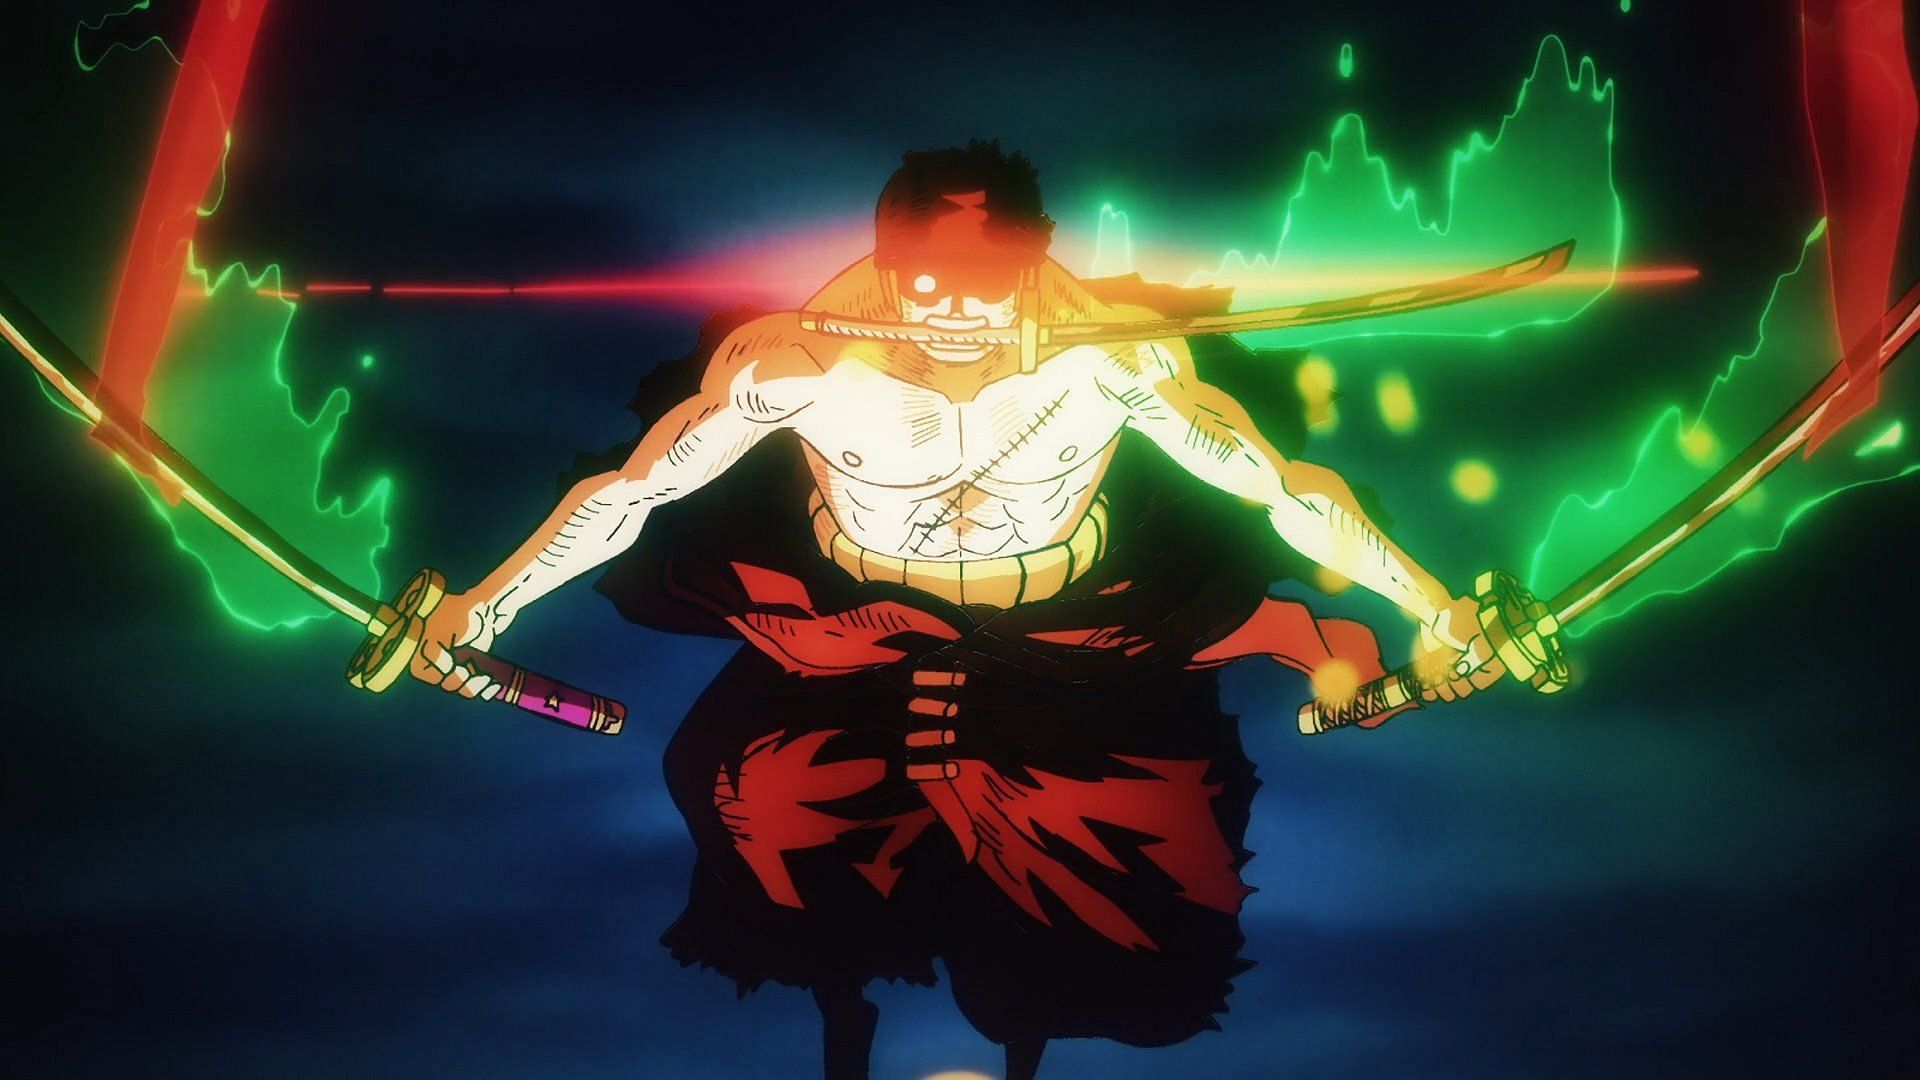 One Piece episode 1085: What ties Zoro to the Shimotsuki Clan